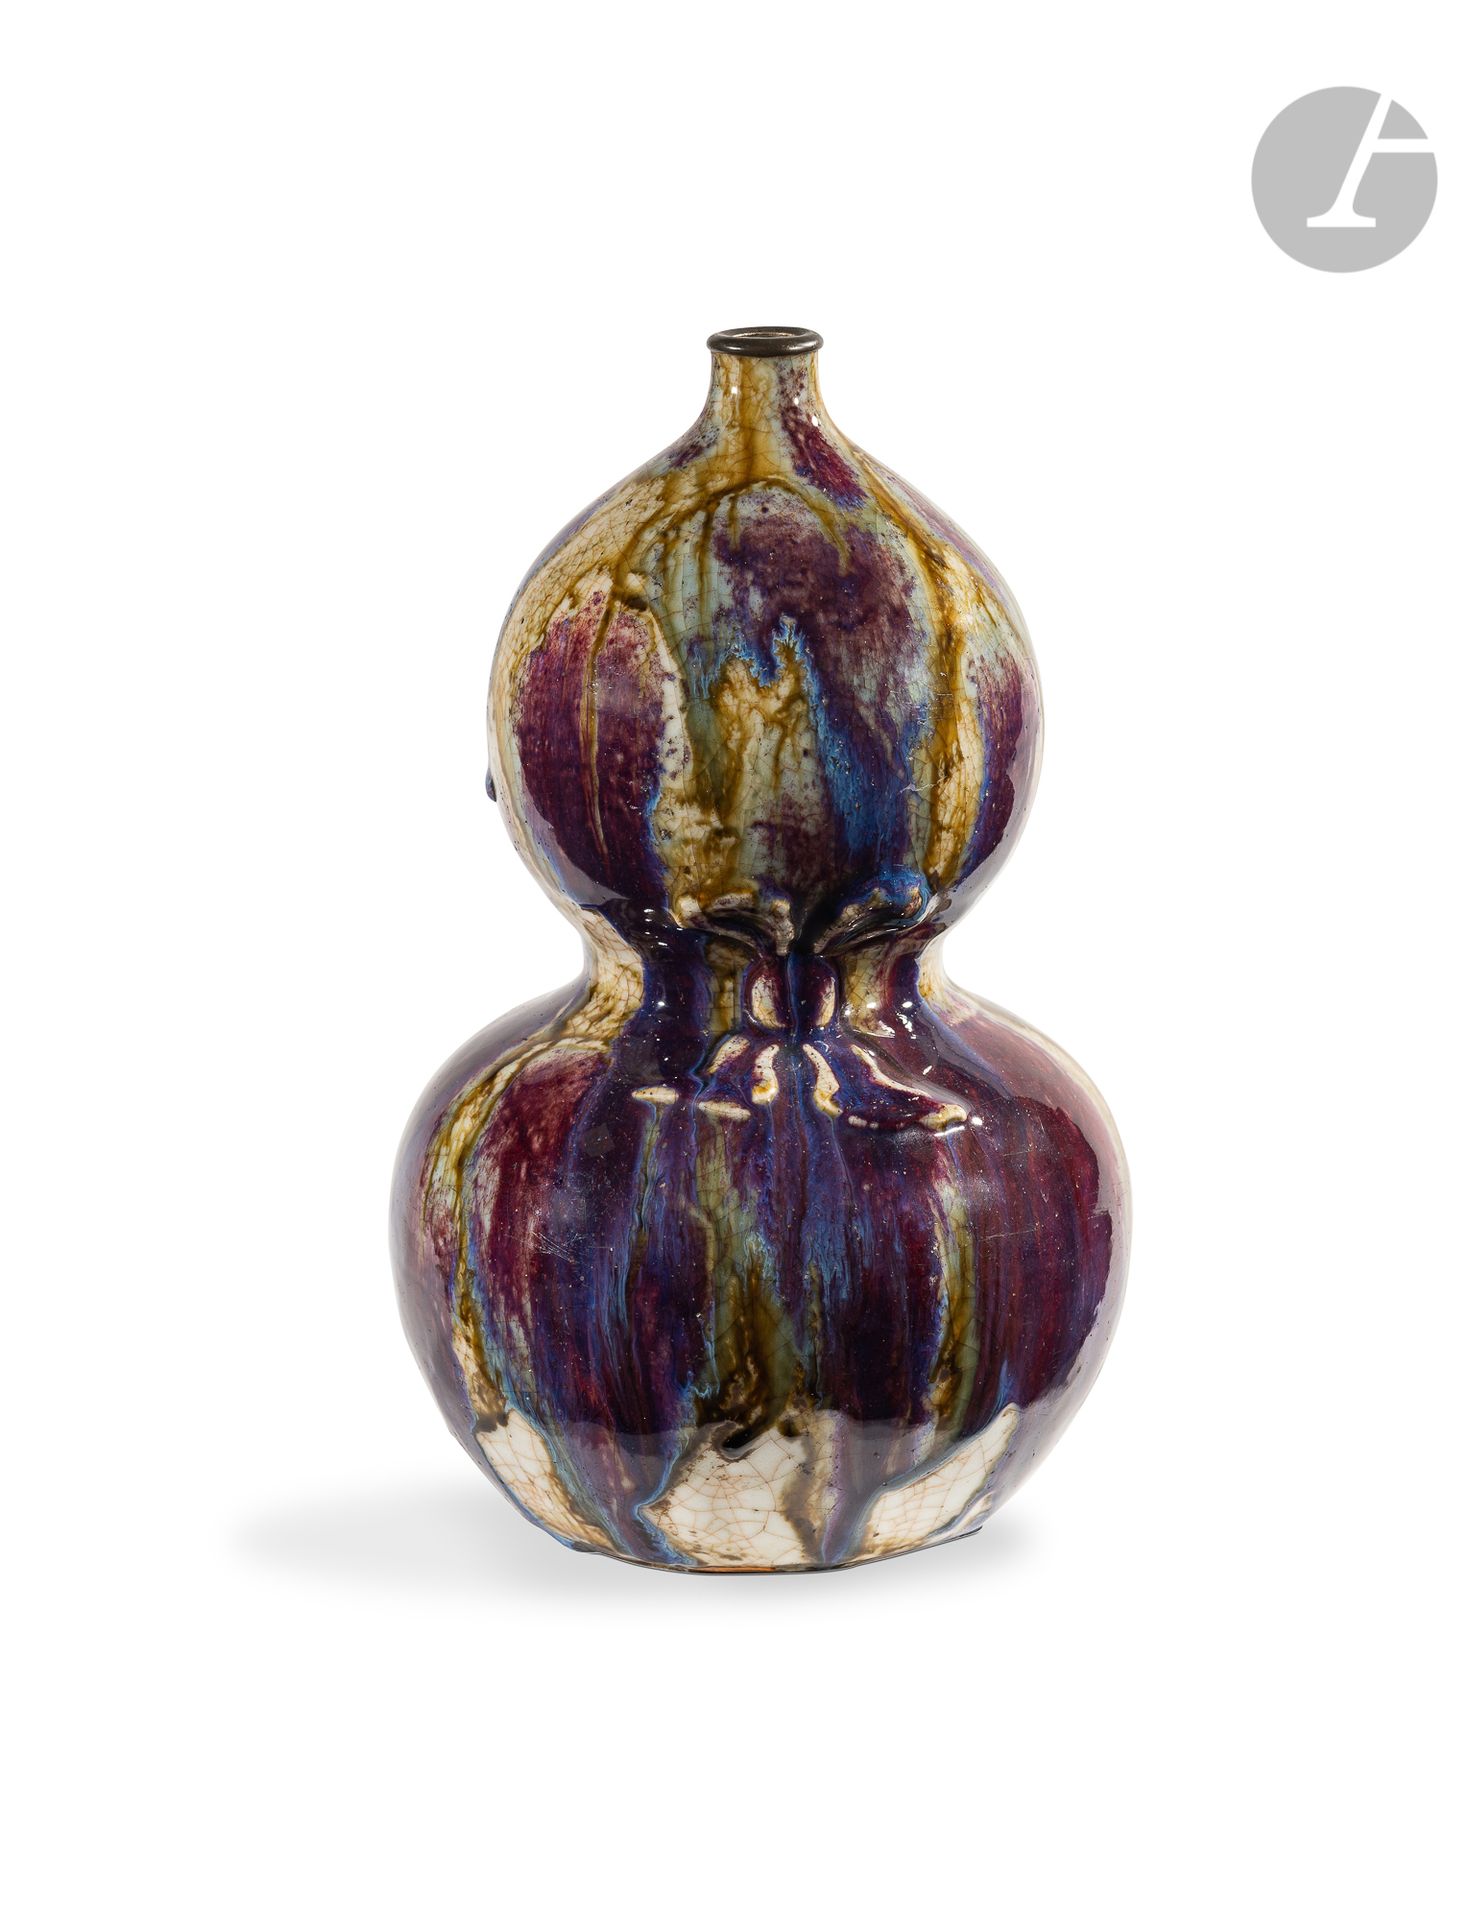 Null Geflammte Porzellan-Doppelkürbis-Vase, China, Ende 19. - Anfang 20. Jh.
Bla&hellip;